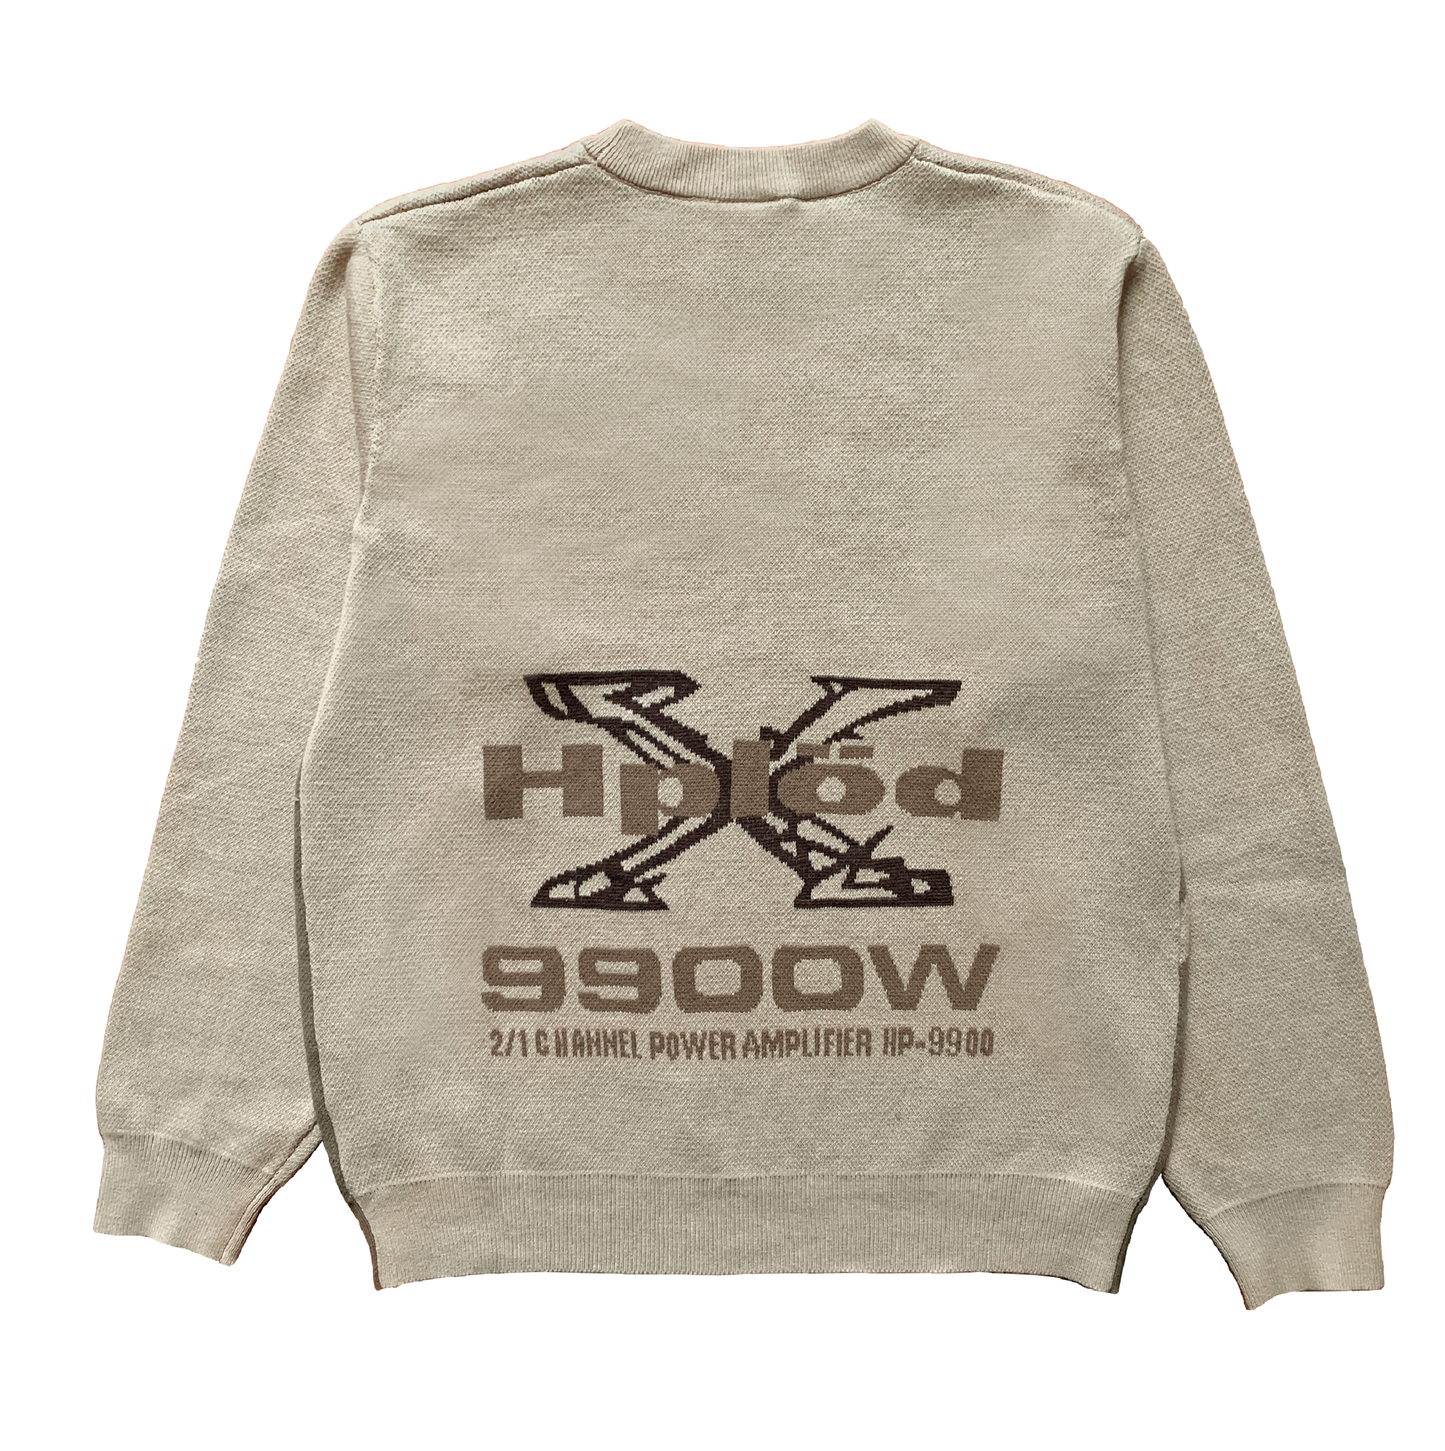 Happy99 Voceteo Sweater - Brown